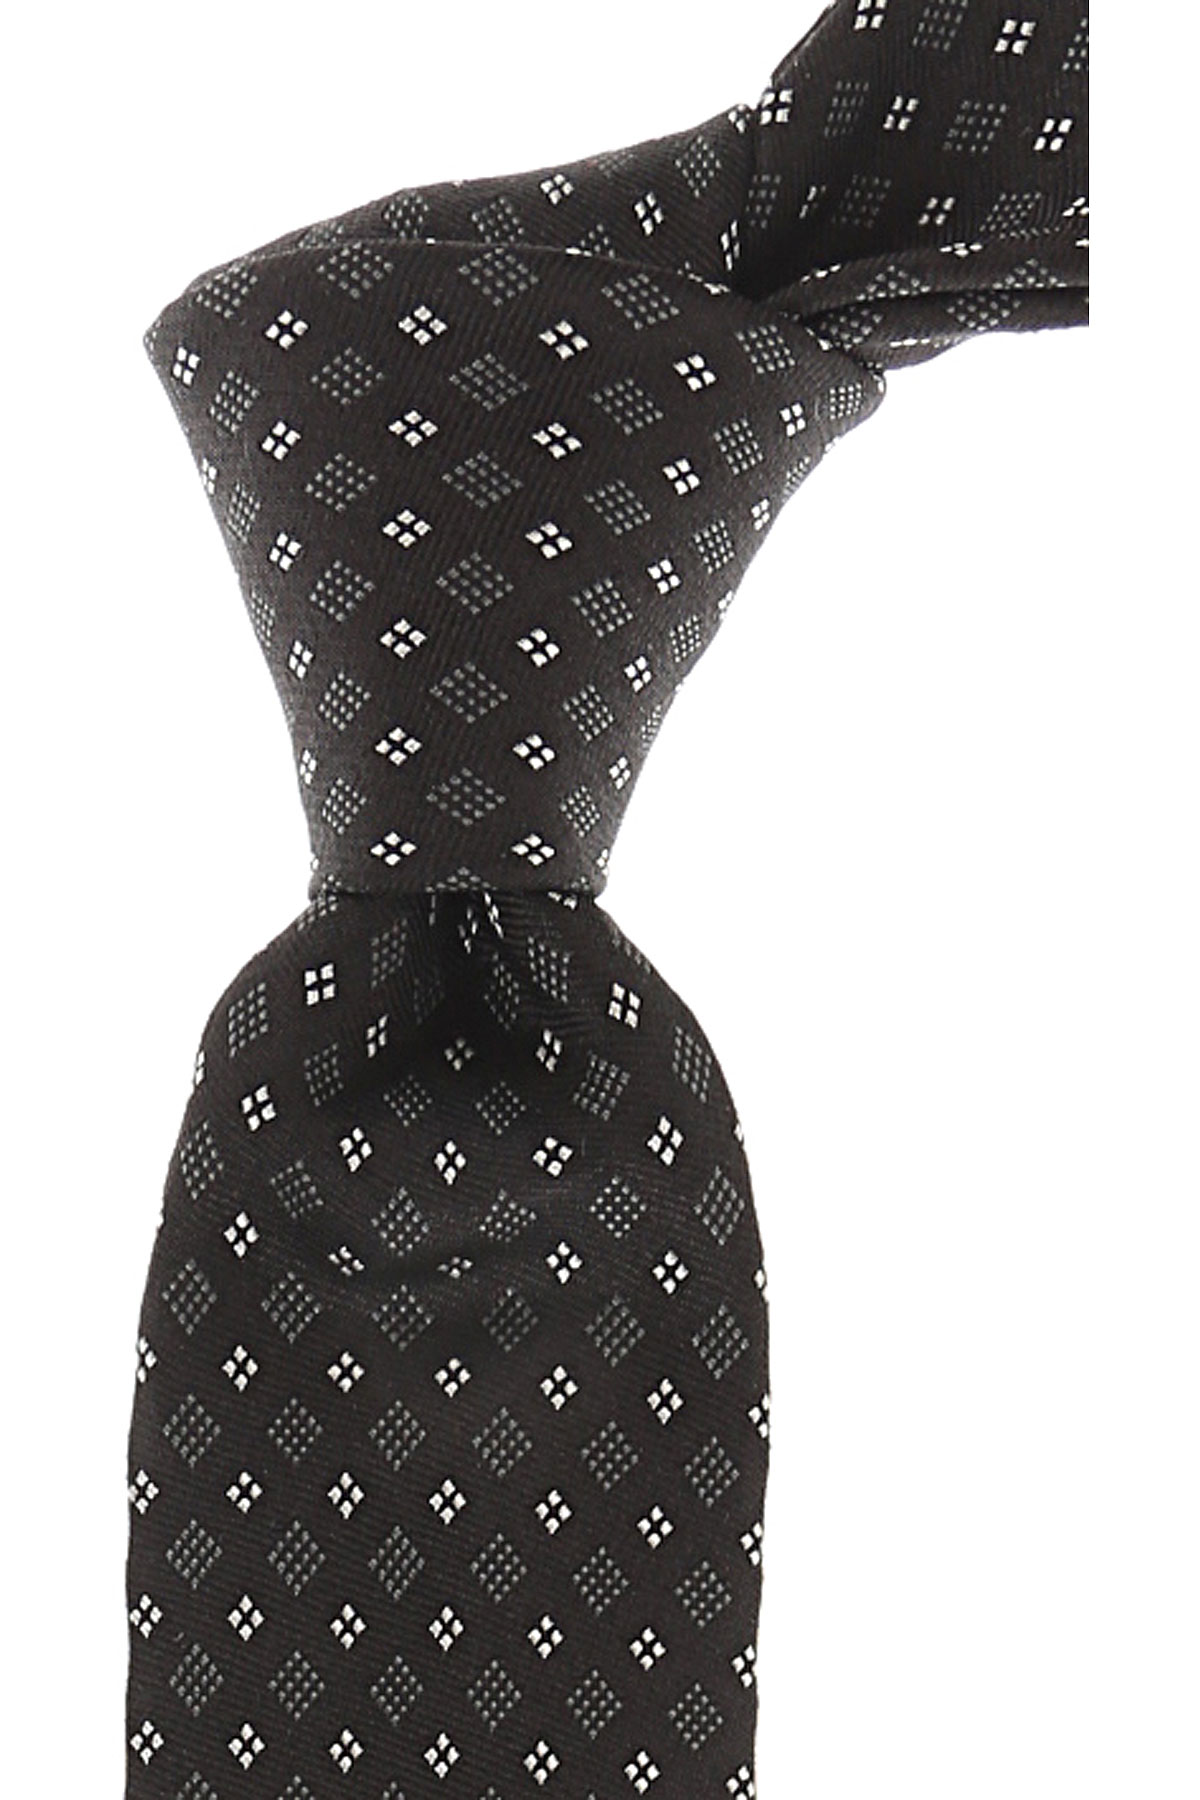 Cravates Valentino , Noir, Soie, 2017